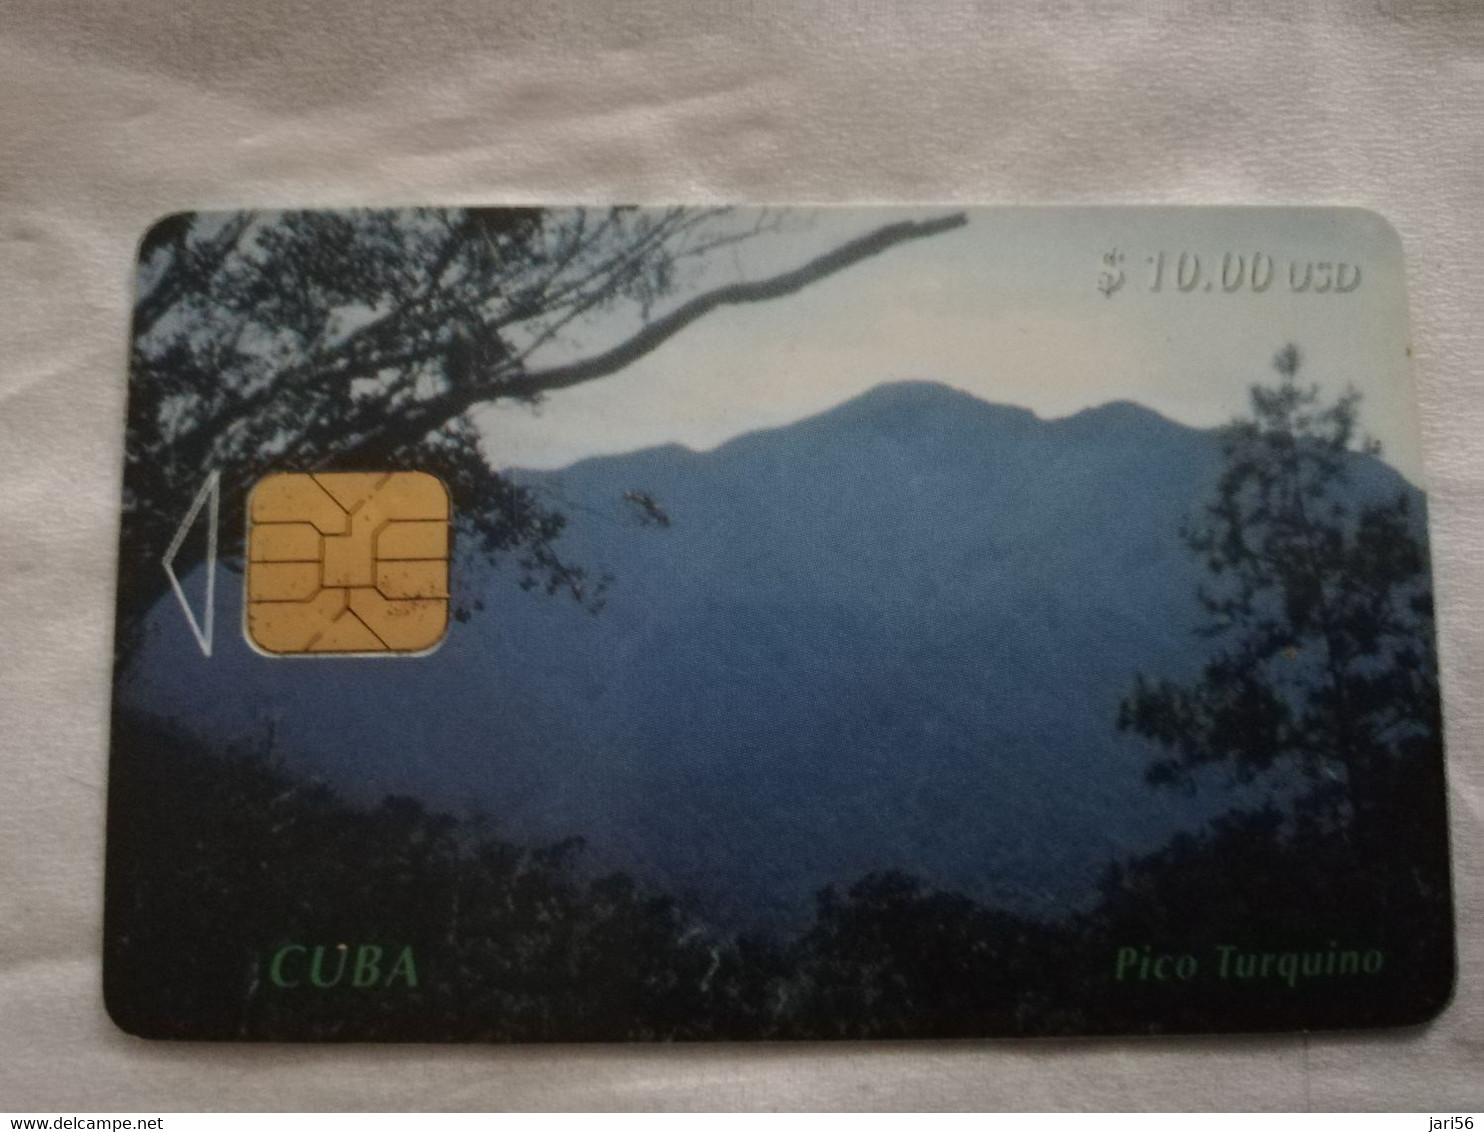 CUBA $10,00 CHIPCARD   PICO TURQUINO     Fine Used Card  ** 6800** - Kuba